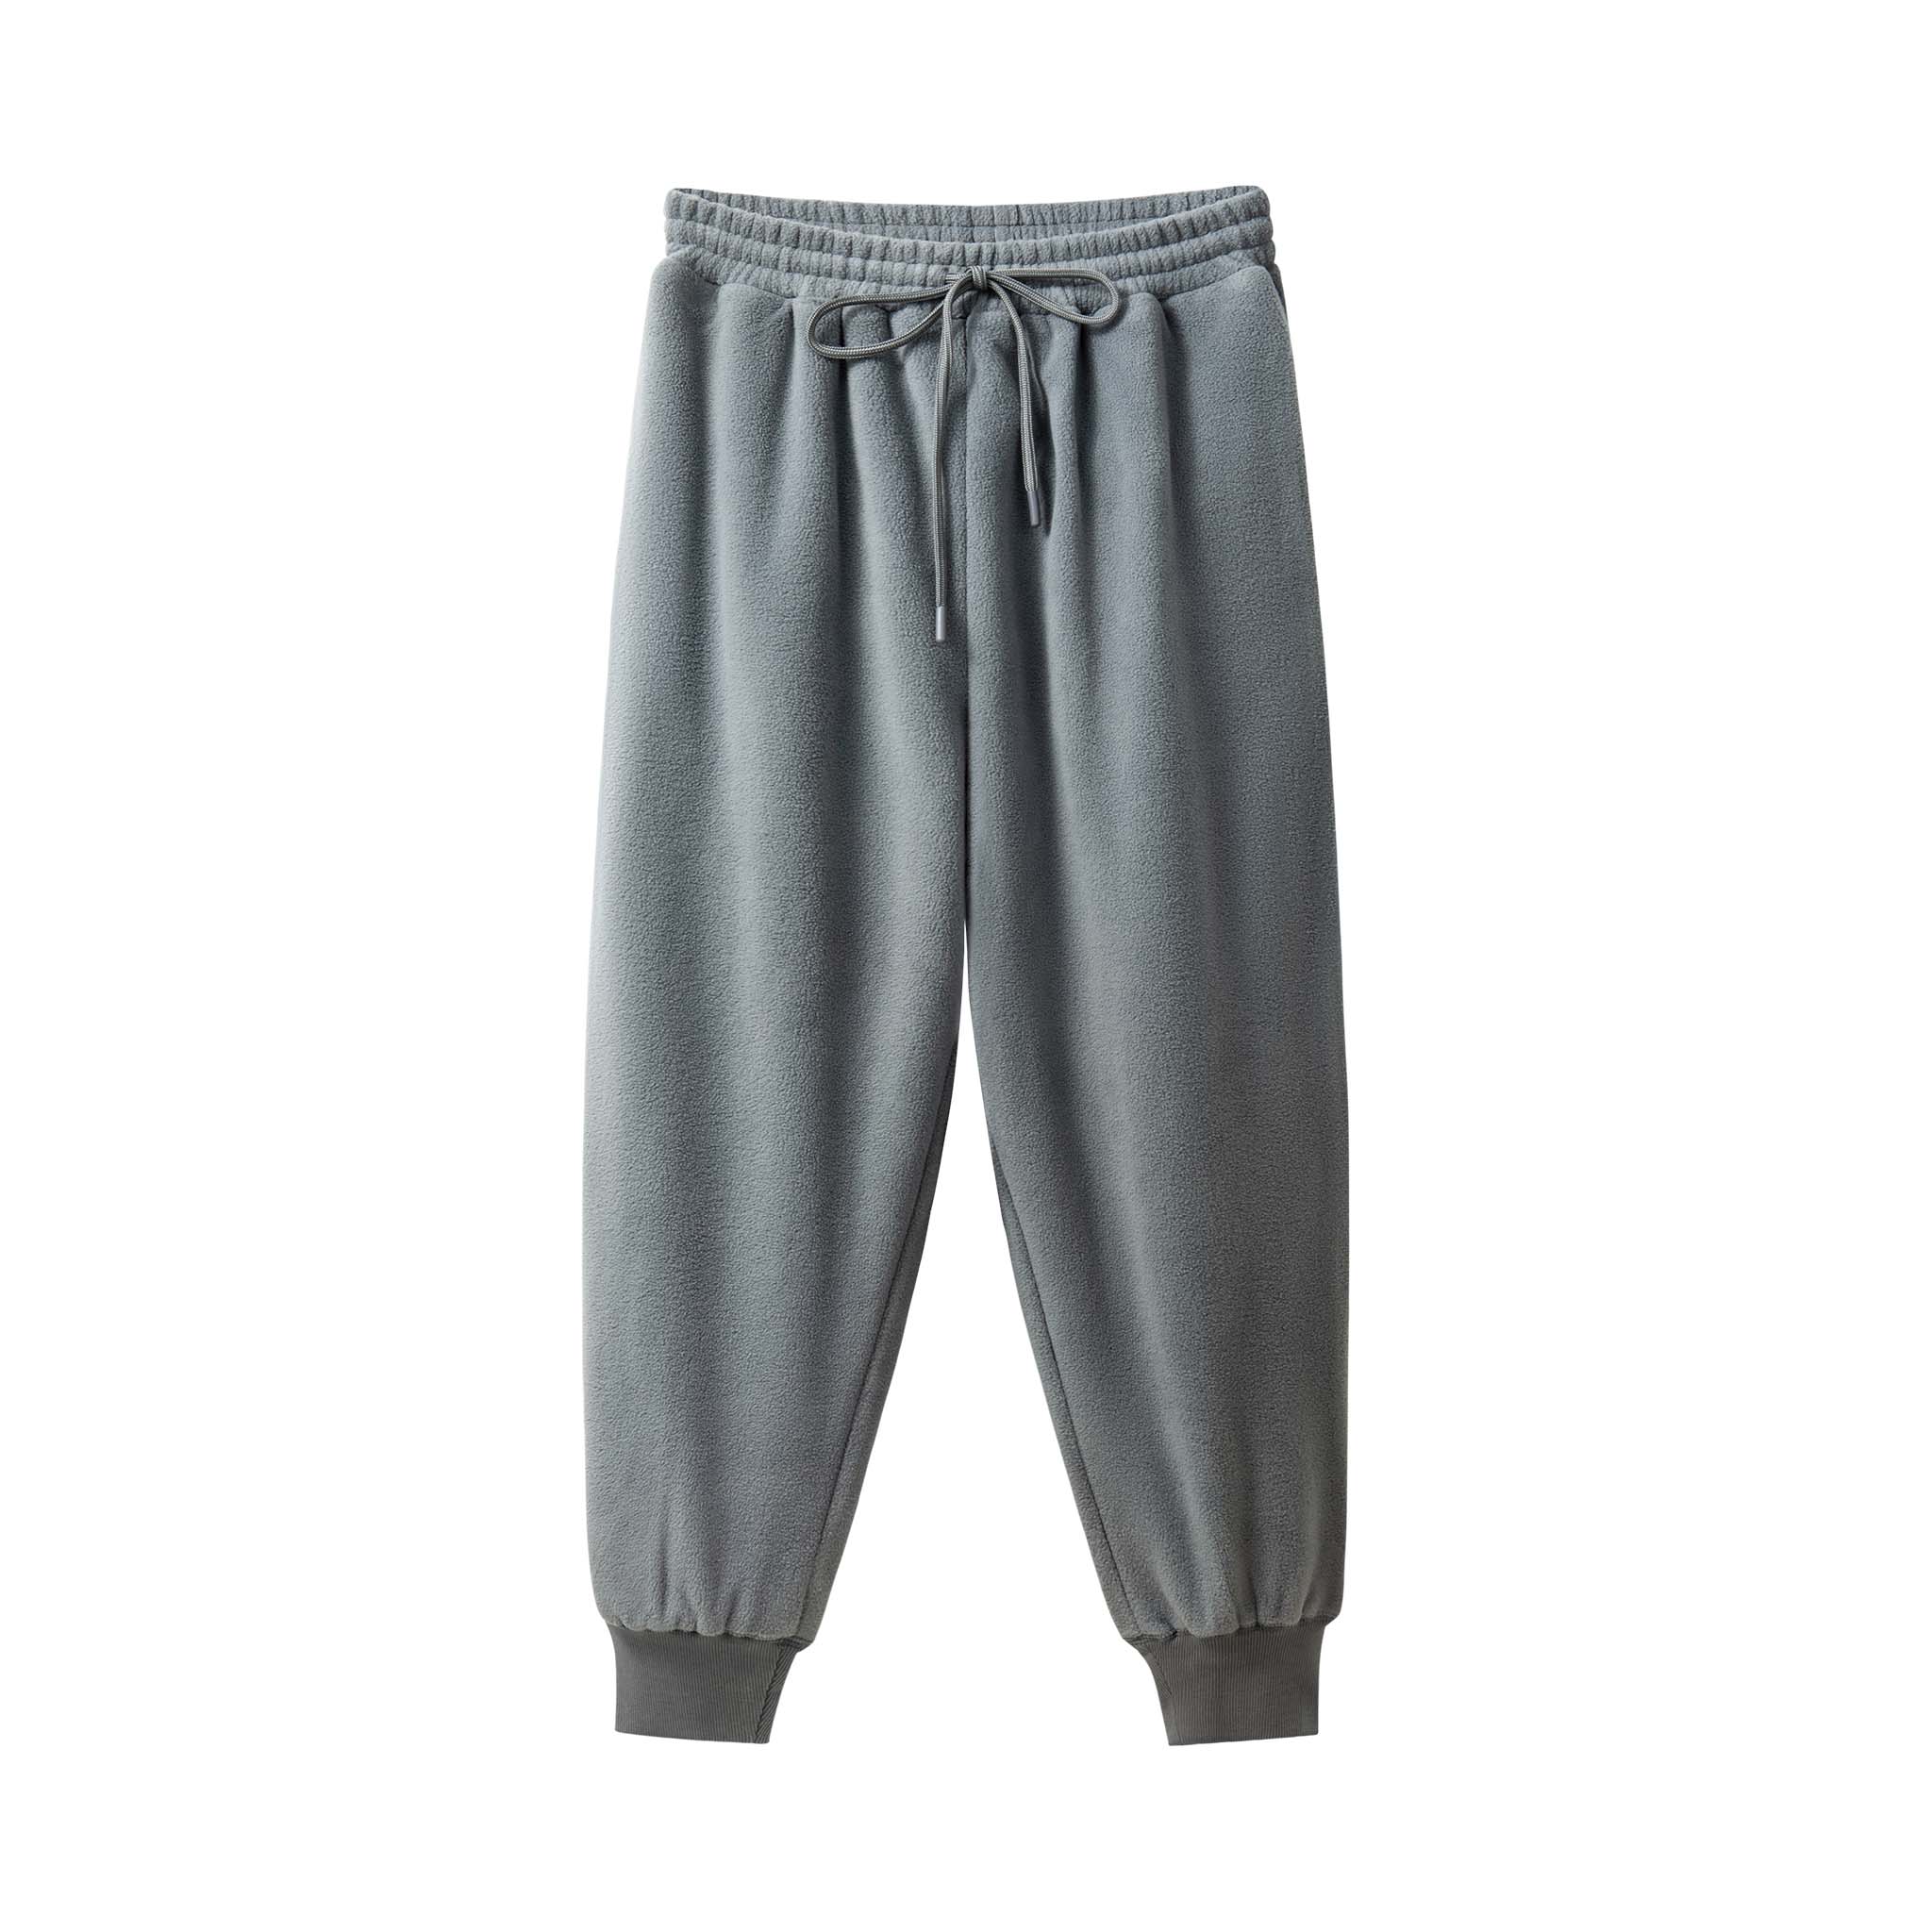 Wairliving Grey Unisex Loungewear - Pants